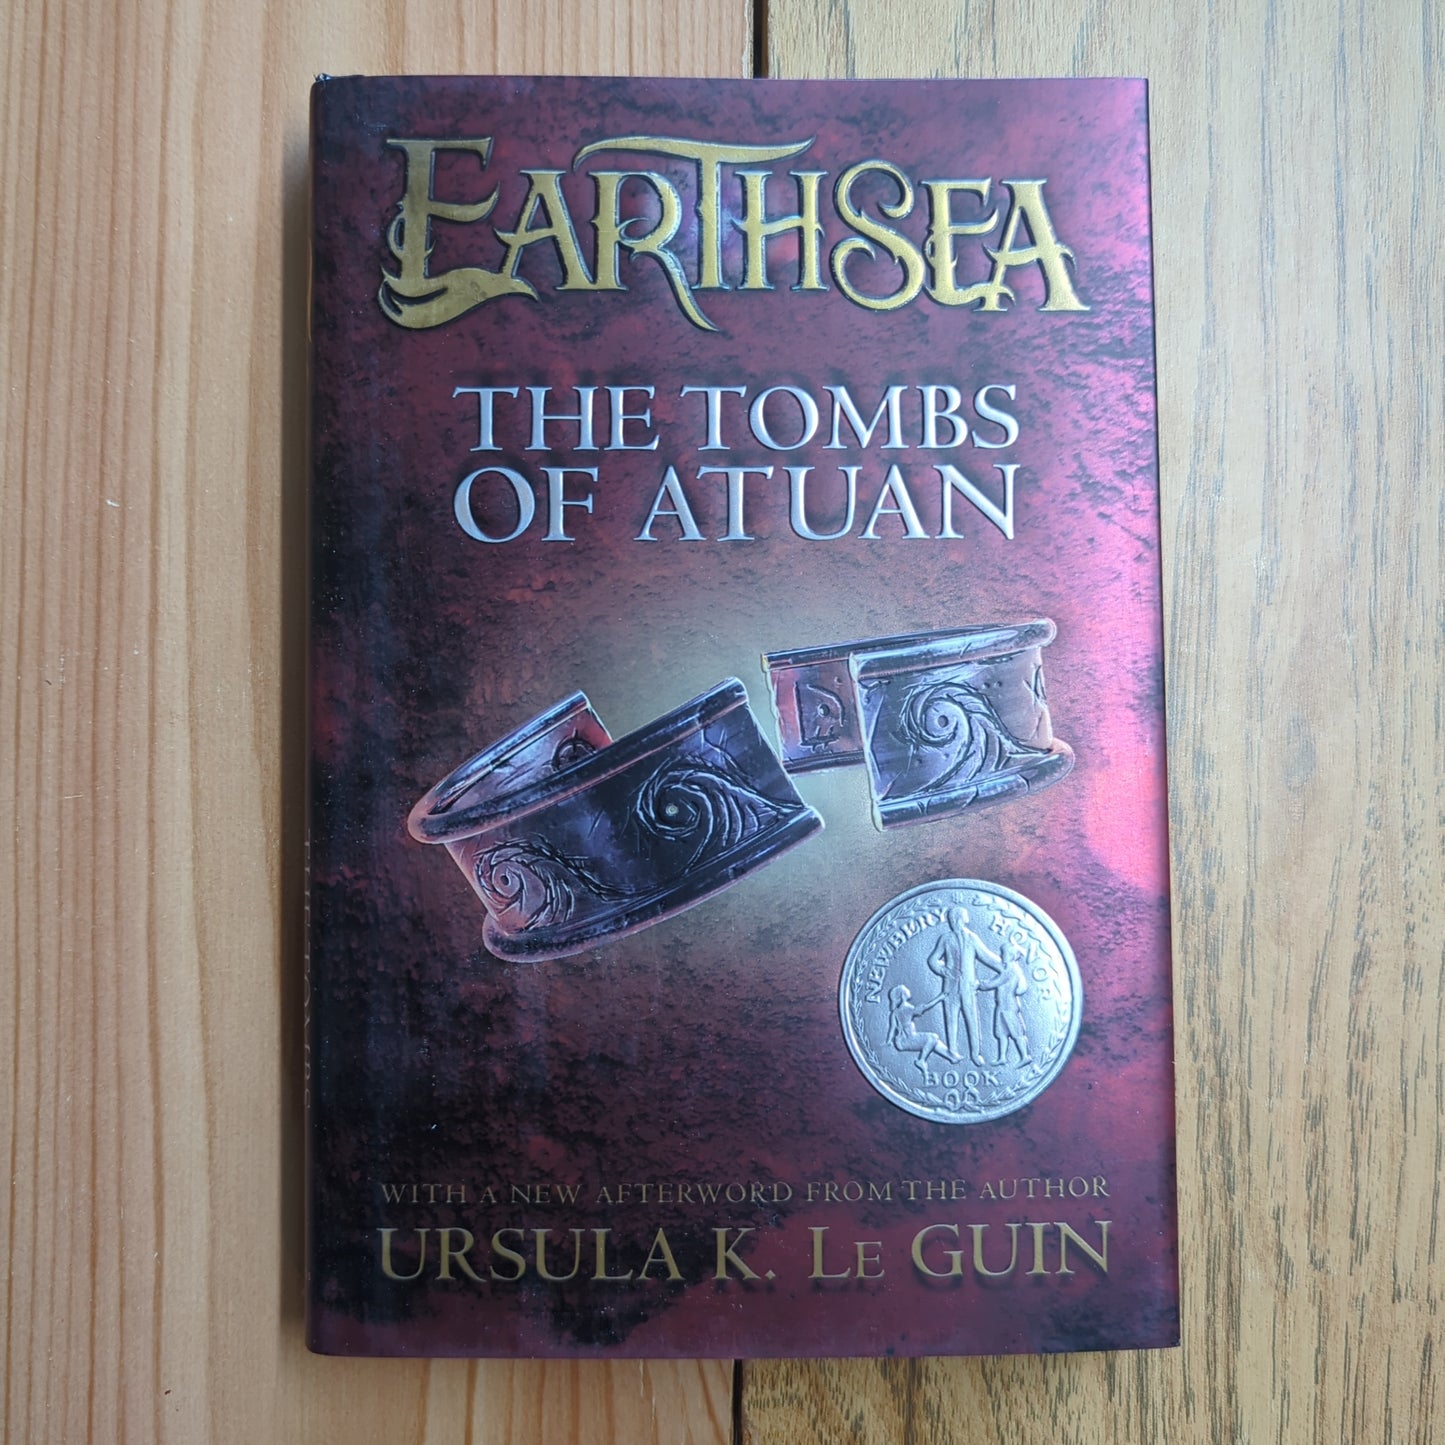 Earthsea: The Tombs of Atuan